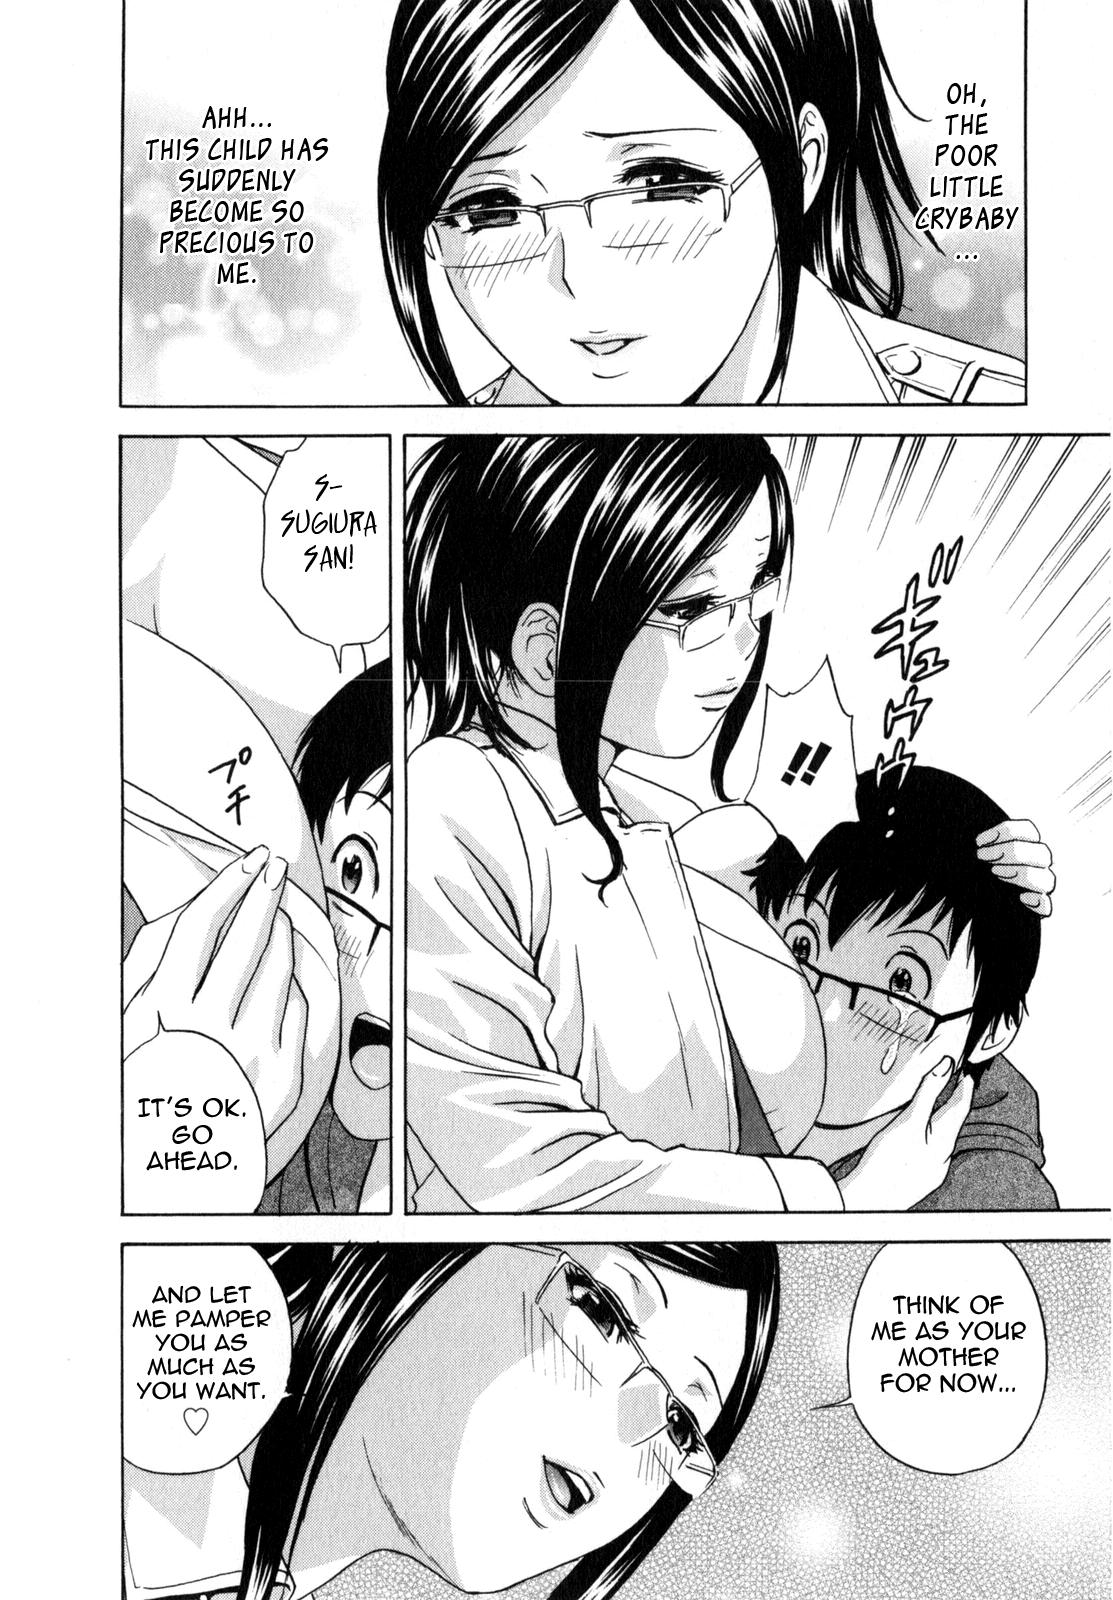 [Hidemaru] Life with Married Women Just Like a Manga 2 - Ch. 1-6 [English] {Tadanohito} 76